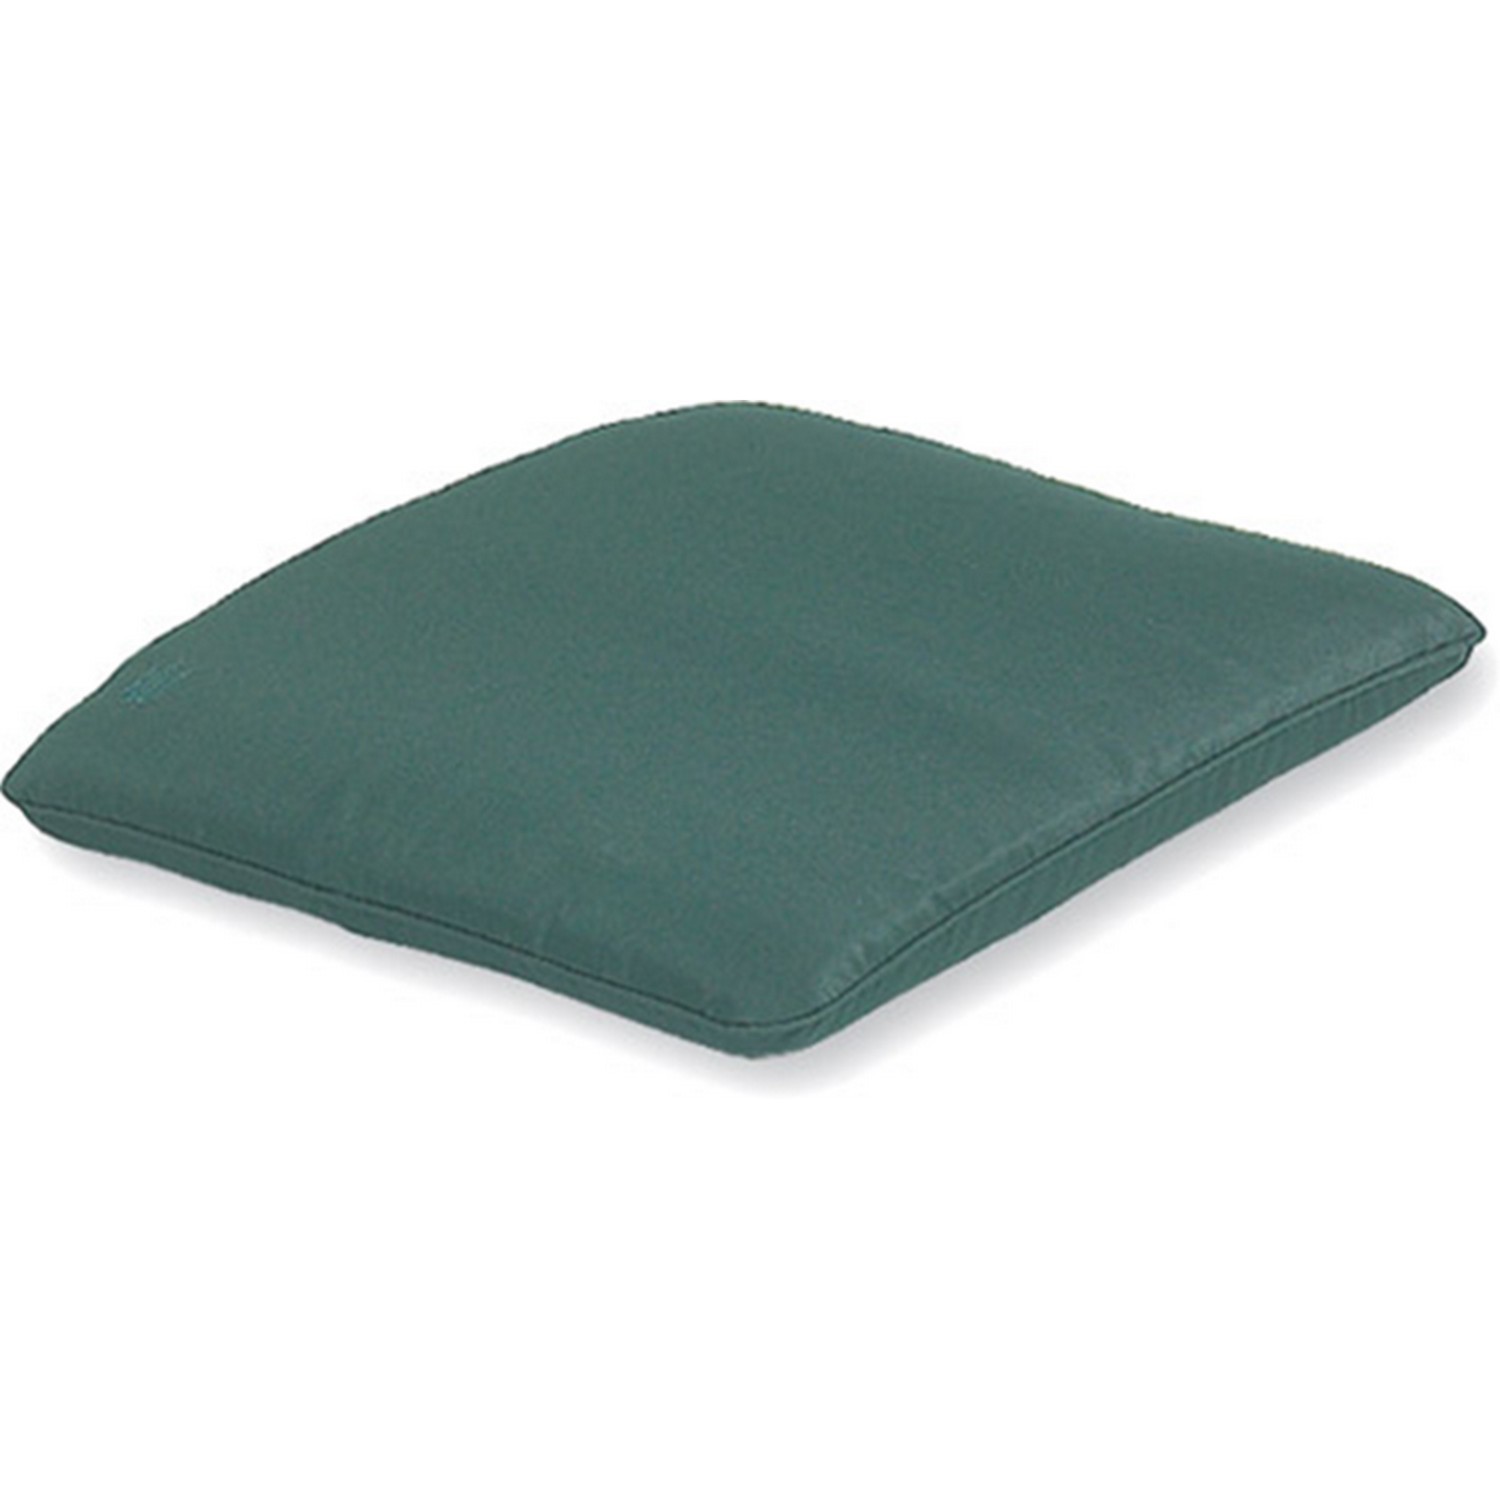 Armchair Cushion  - Green Image 1